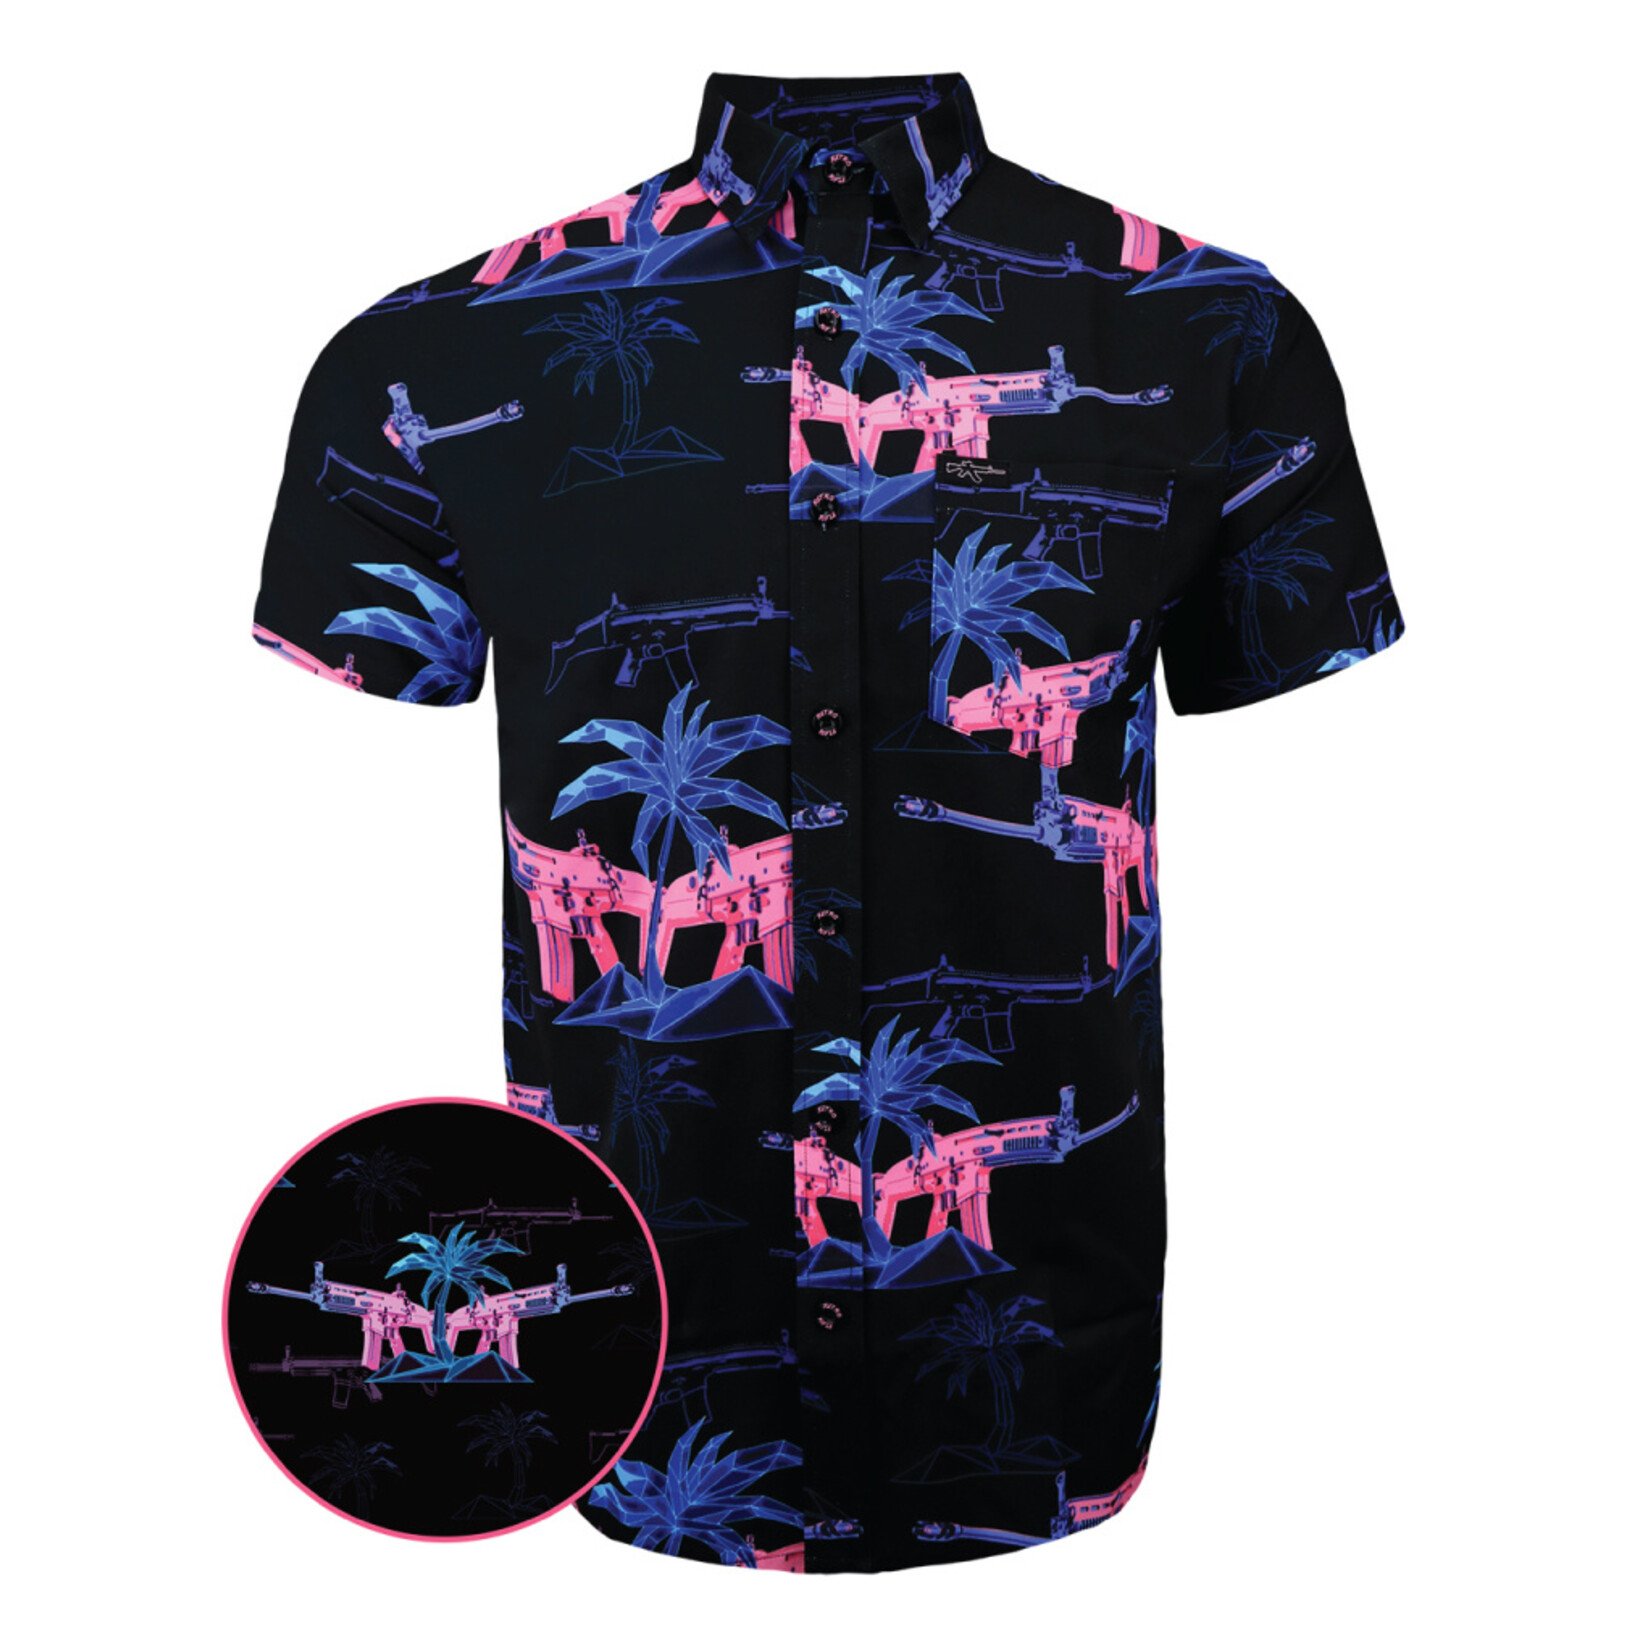 The Palm Hawaiian Shirt